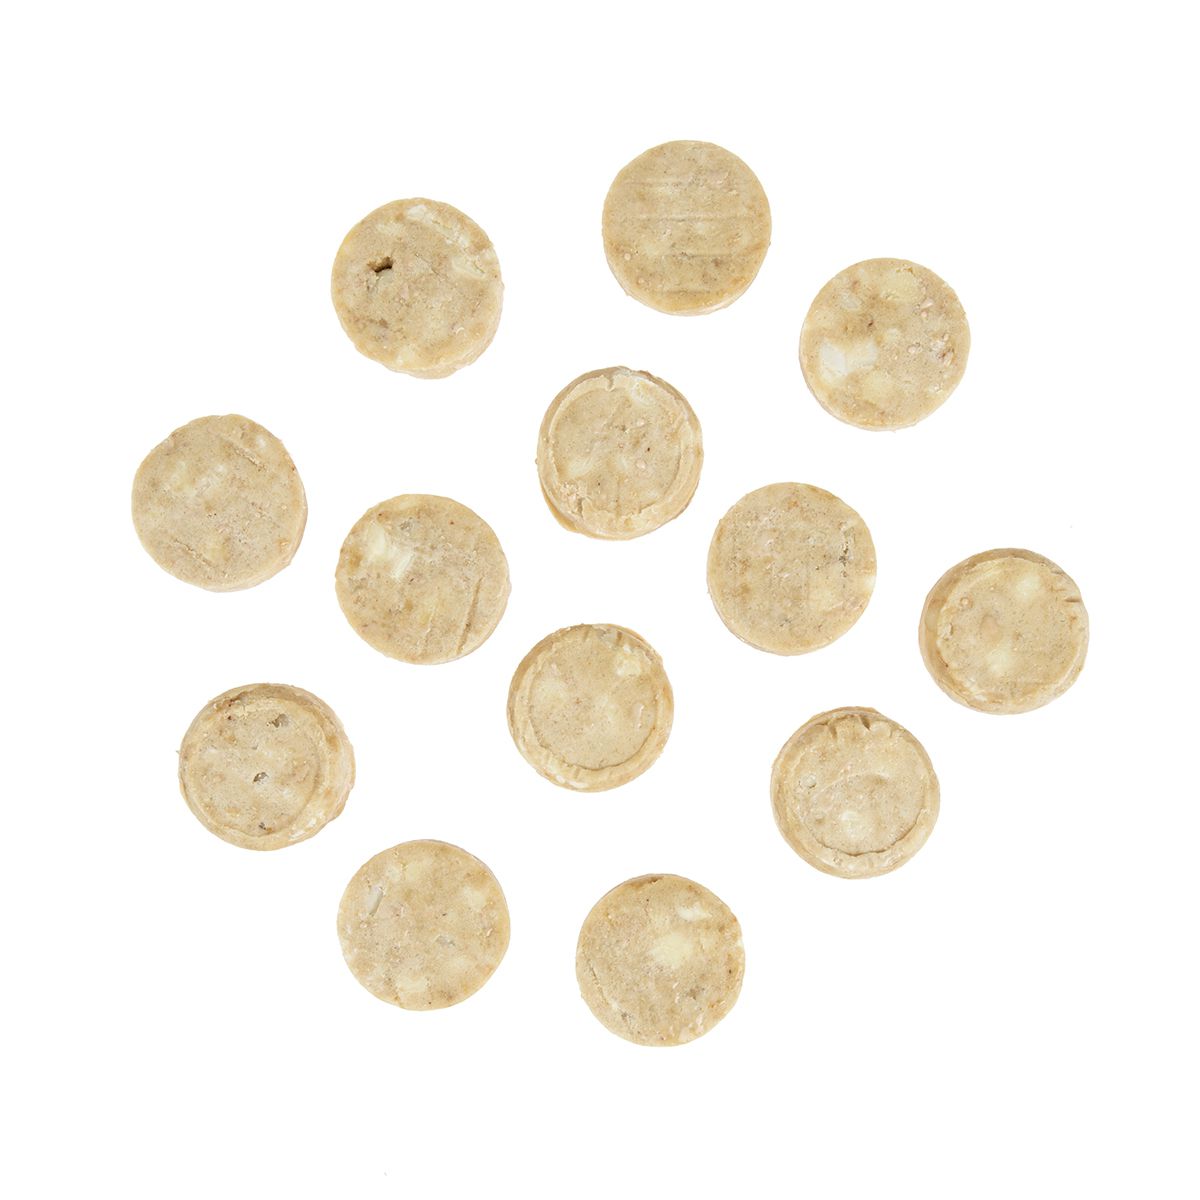 Christie Cookies Ready to Bake White Choco Macadamia Nut Cookies 1.45 OZ